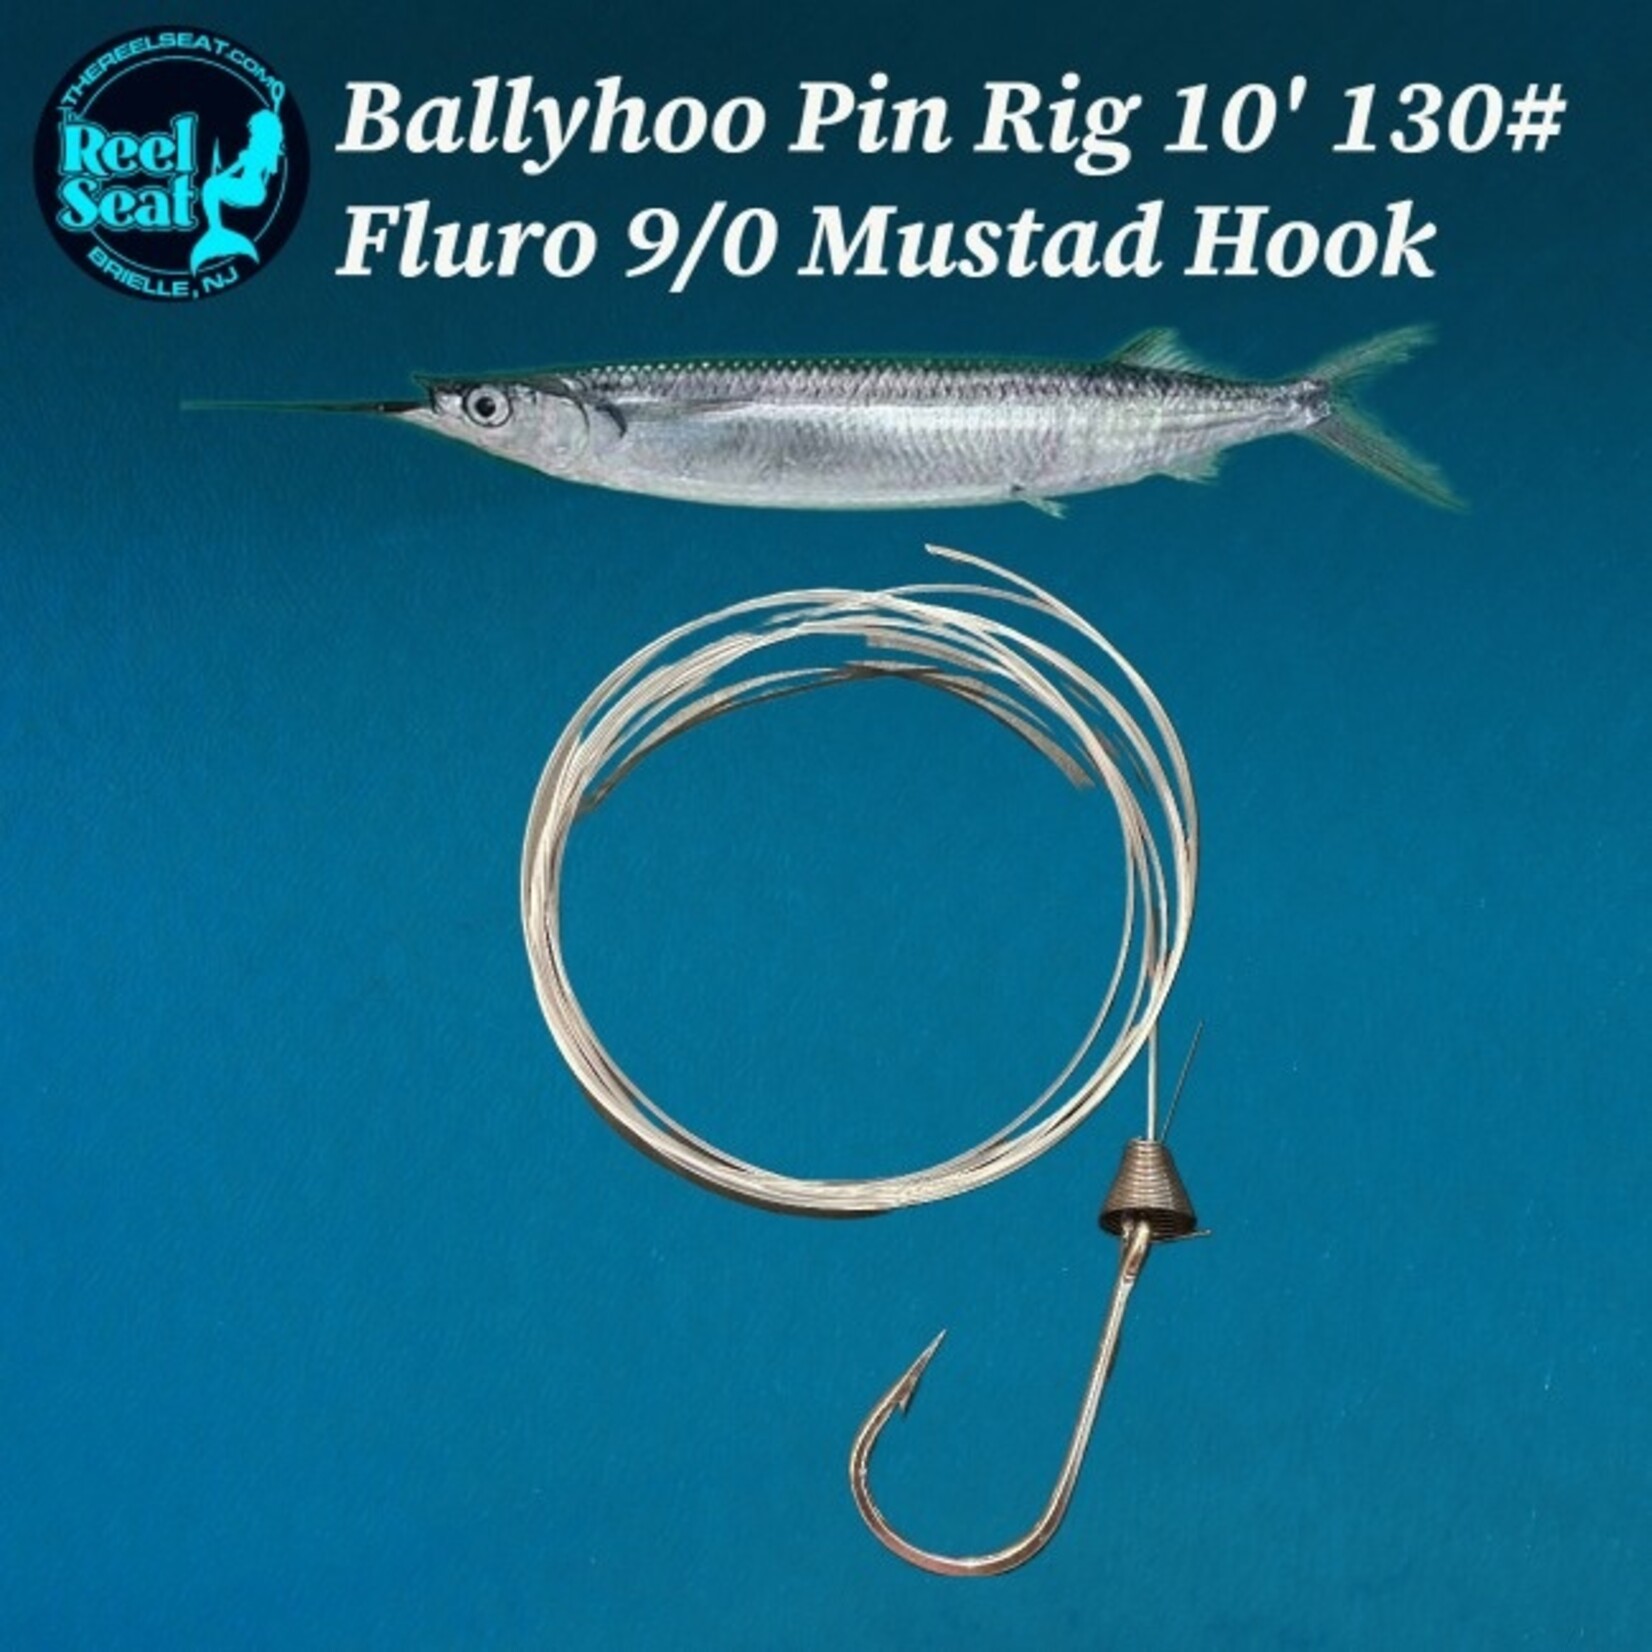 The Reel Seat RS Ballyhoo Pin Rig 10' 130# Fluro 9/0 Hook